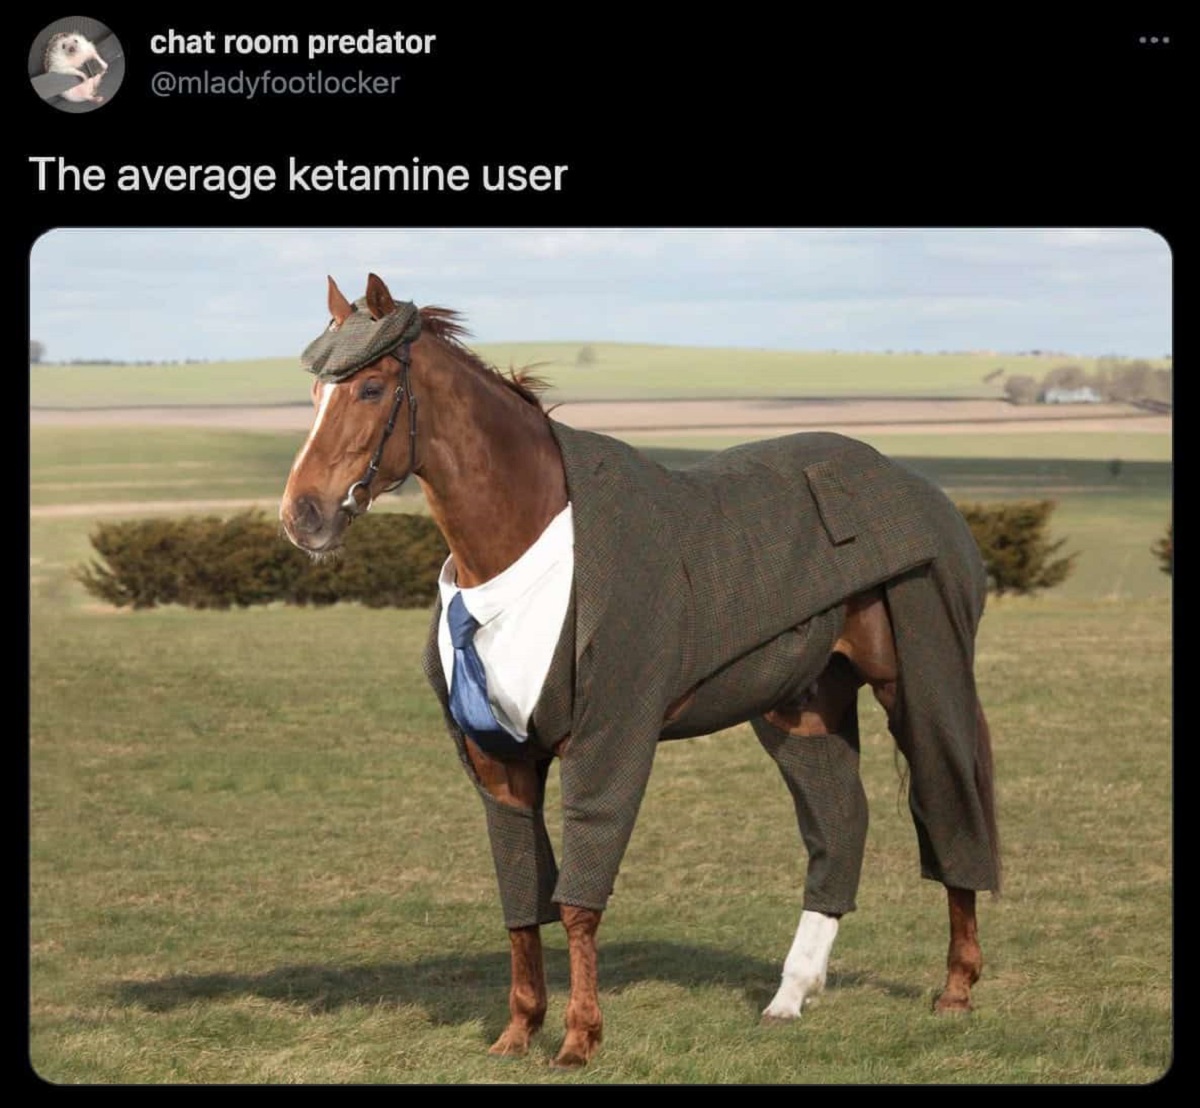 clothes horse animal - chat room predator The average ketamine user